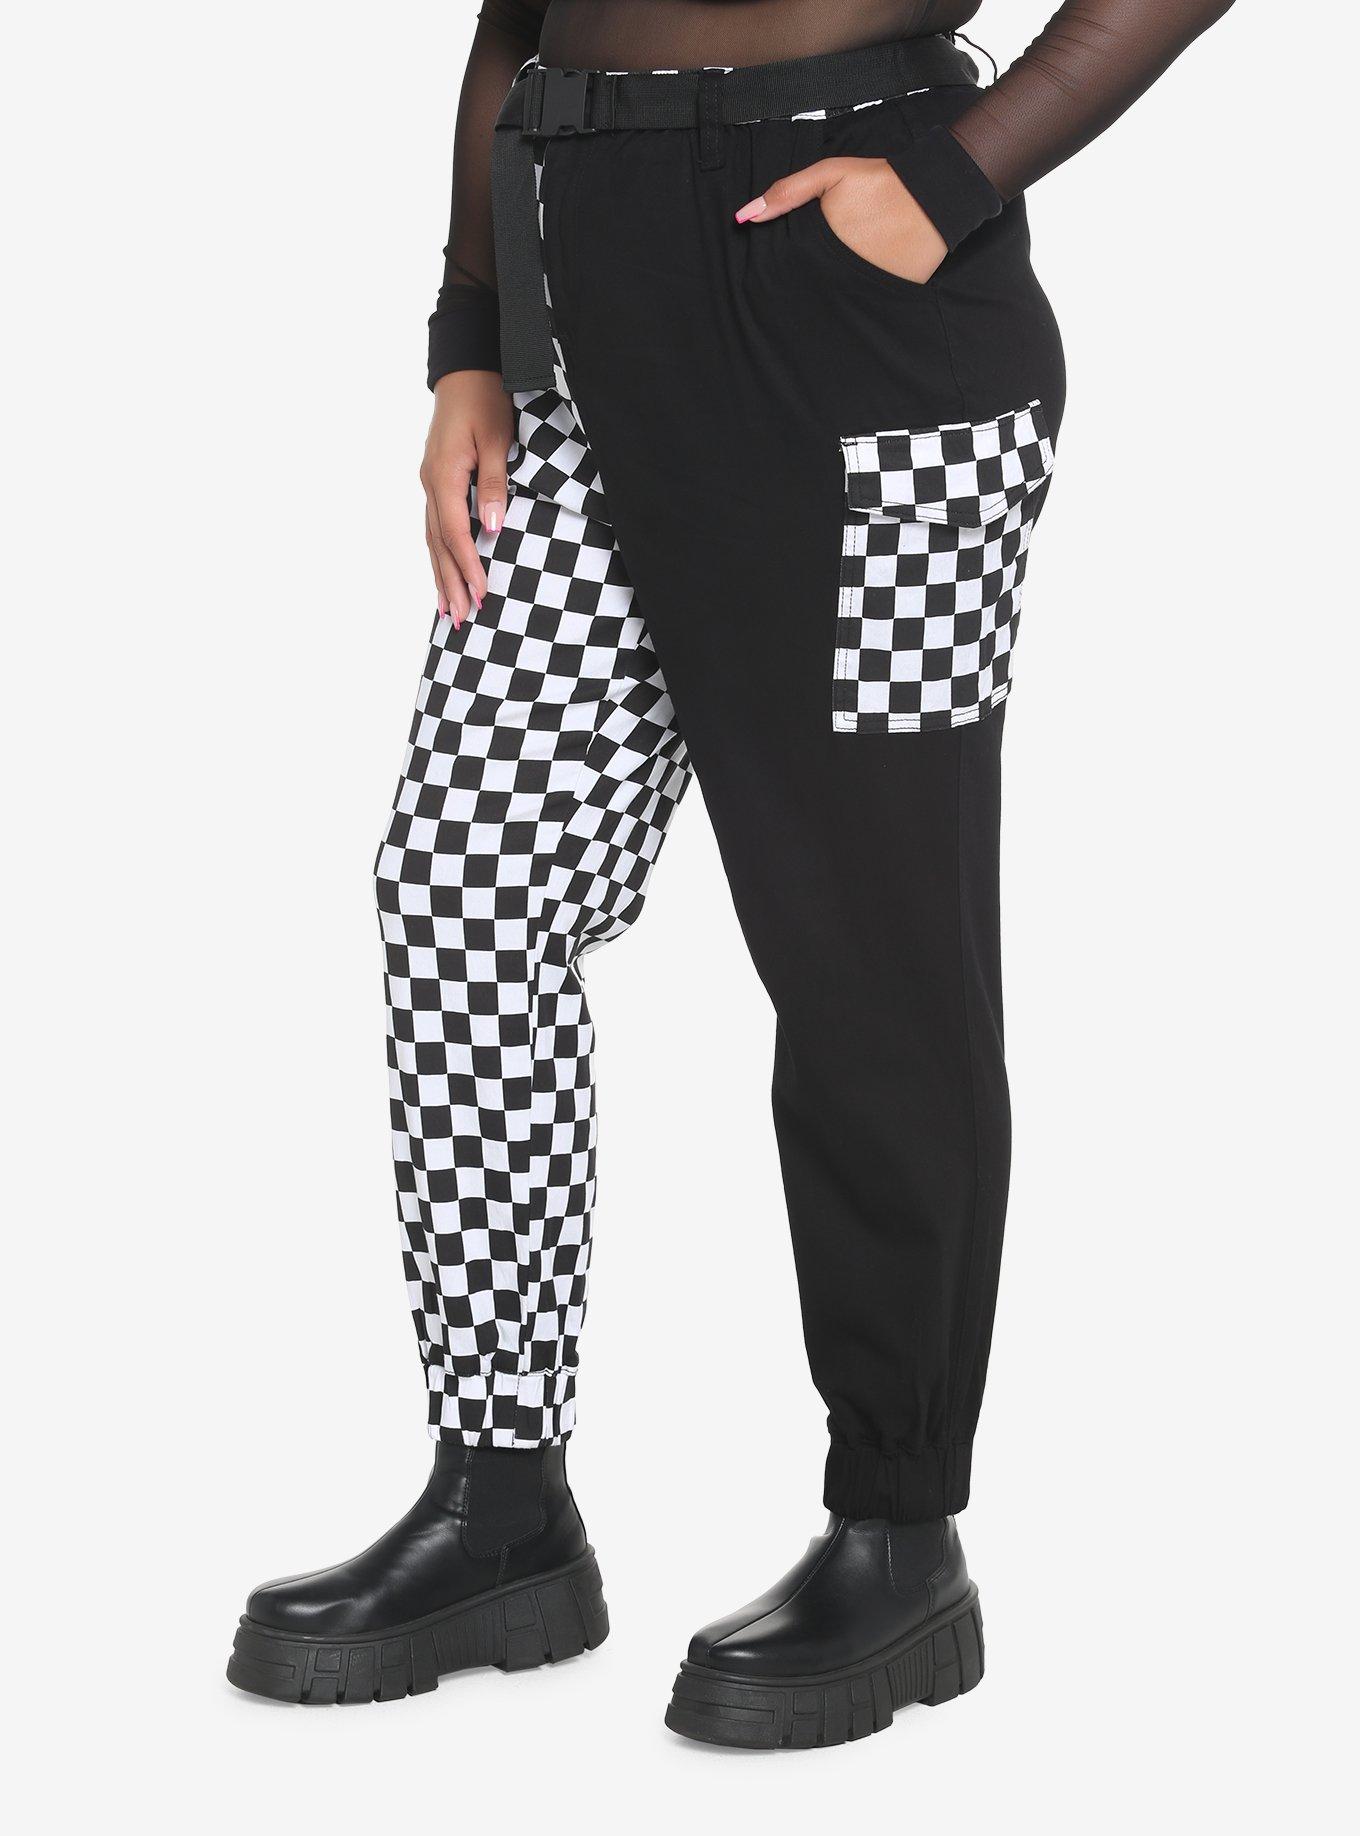 Black & White Checkered Split Cargo Jogger Pants Plus Size, BLACK  WHITE, hi-res